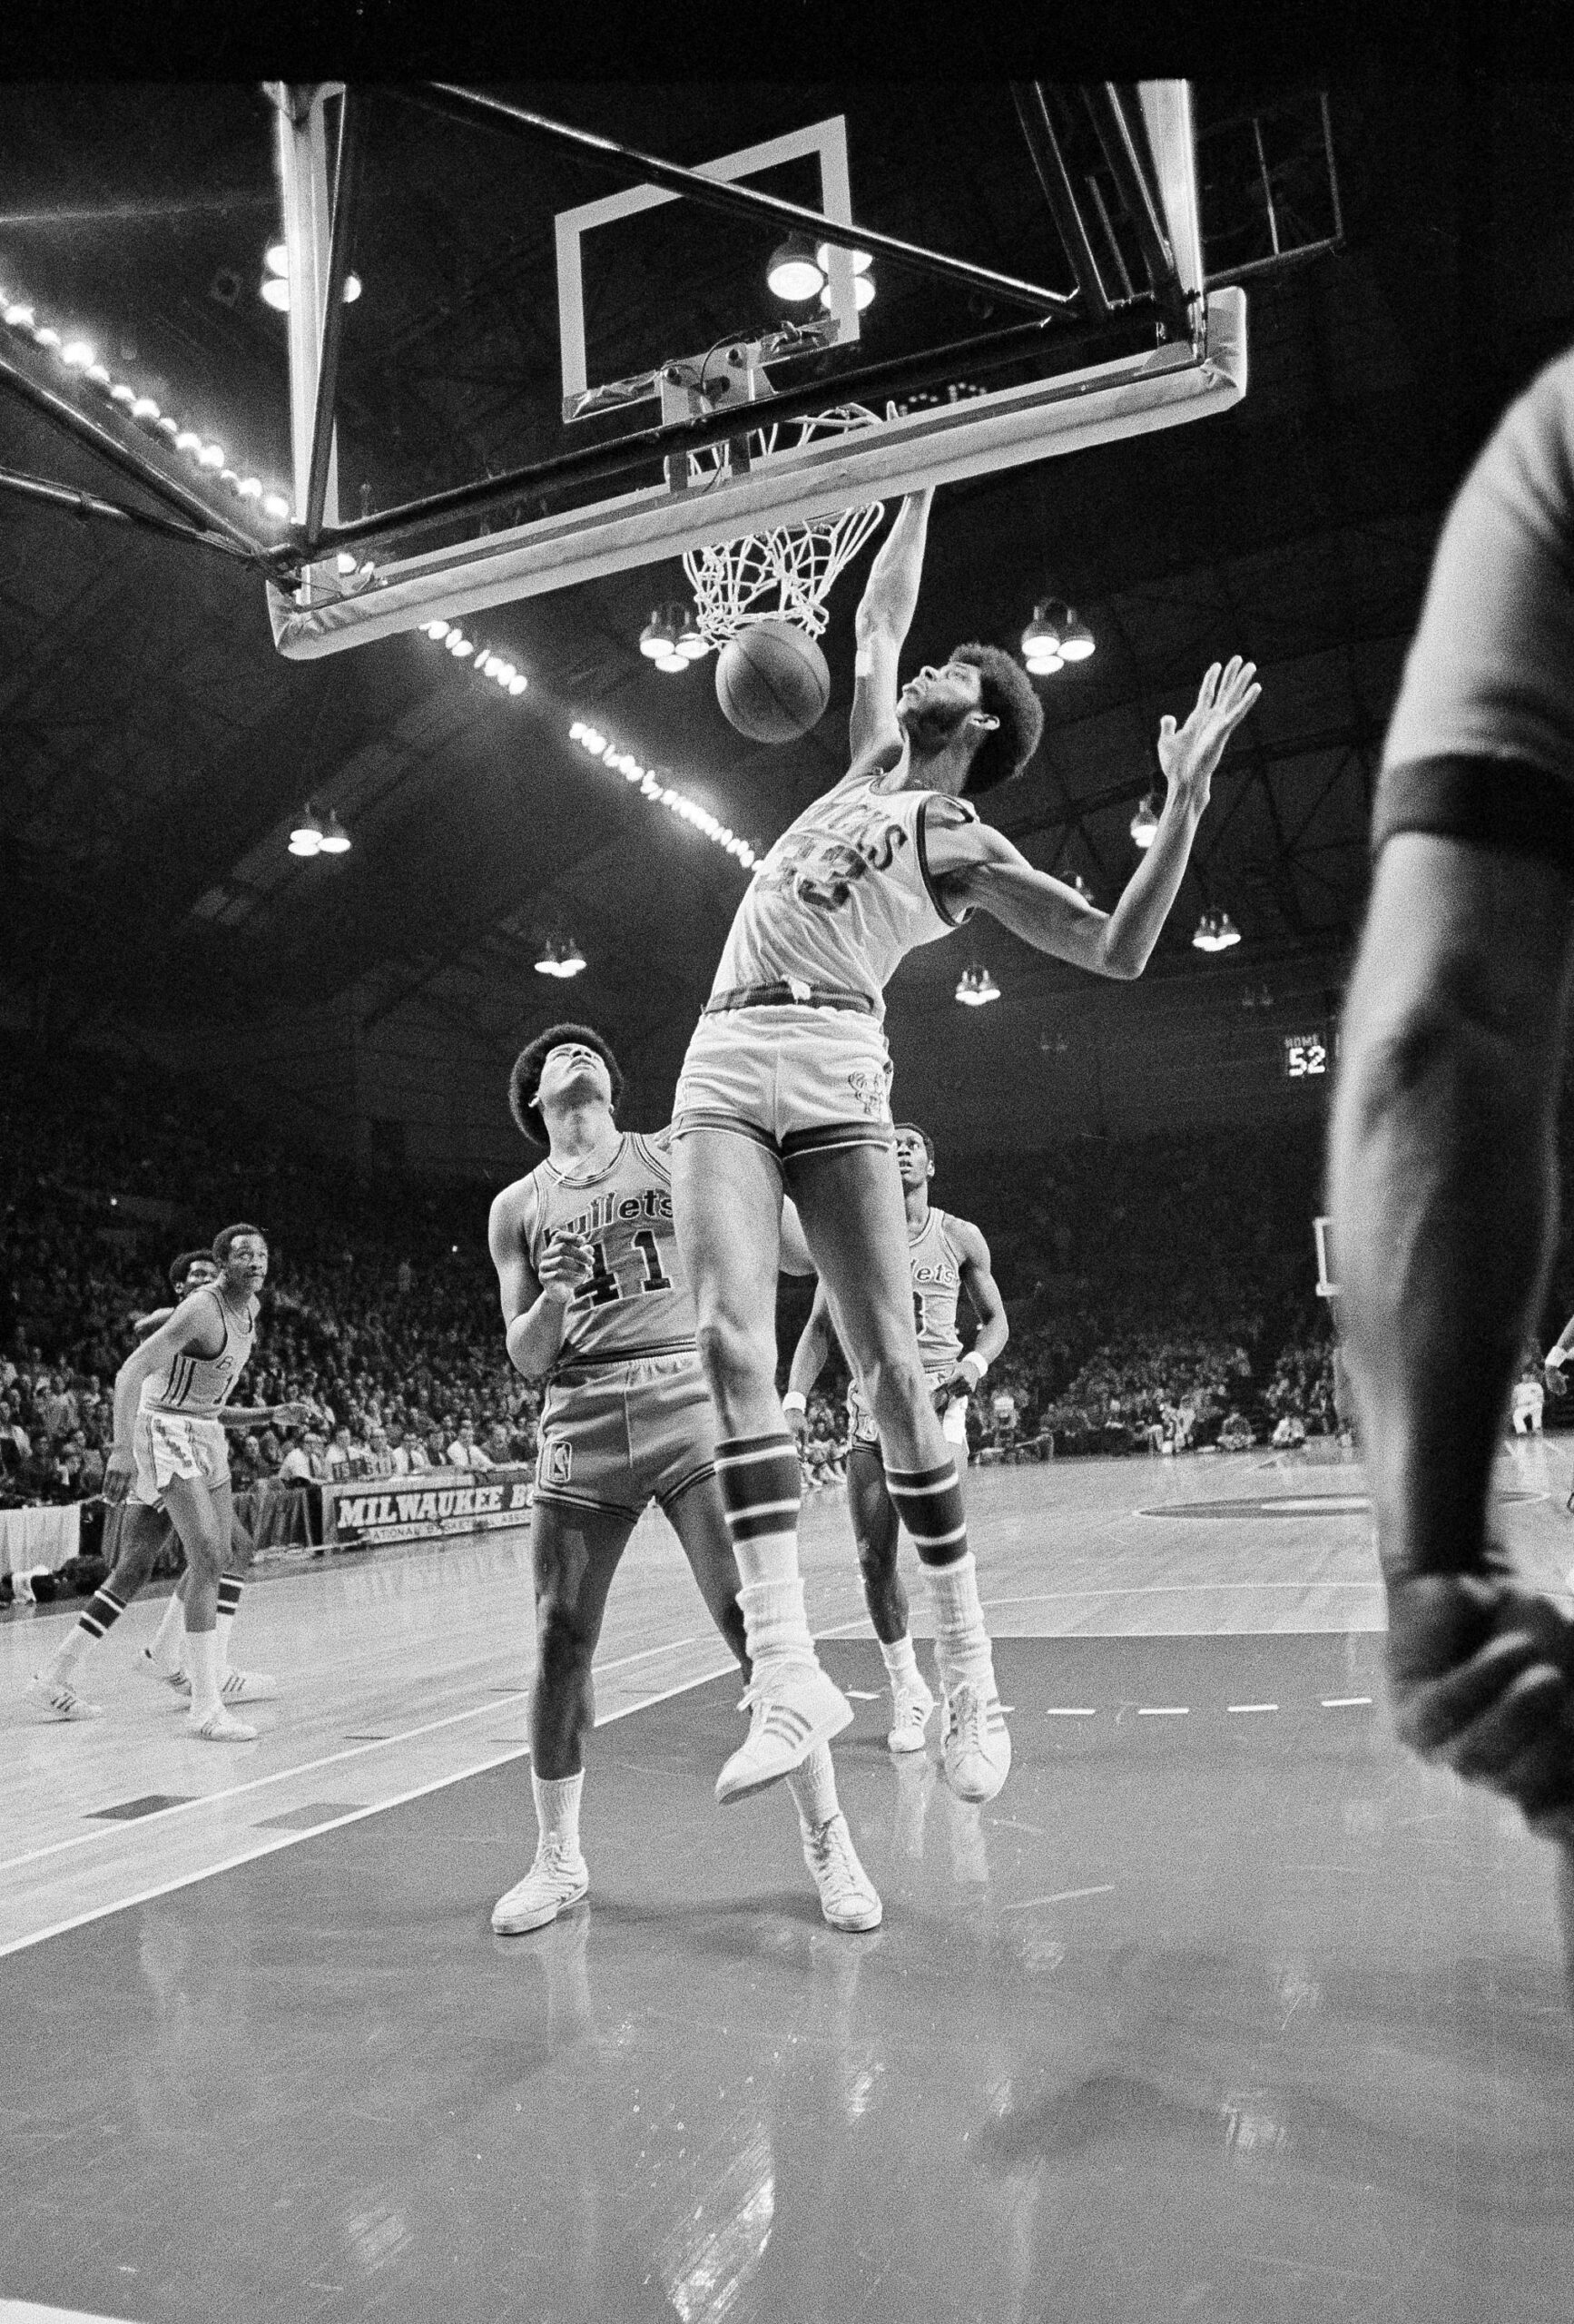 Baltimore Bullets' Wes Unseld watches as Bucks Lew Alcindor, now, Kareem Abdul-Jabbar, dunks a basketball